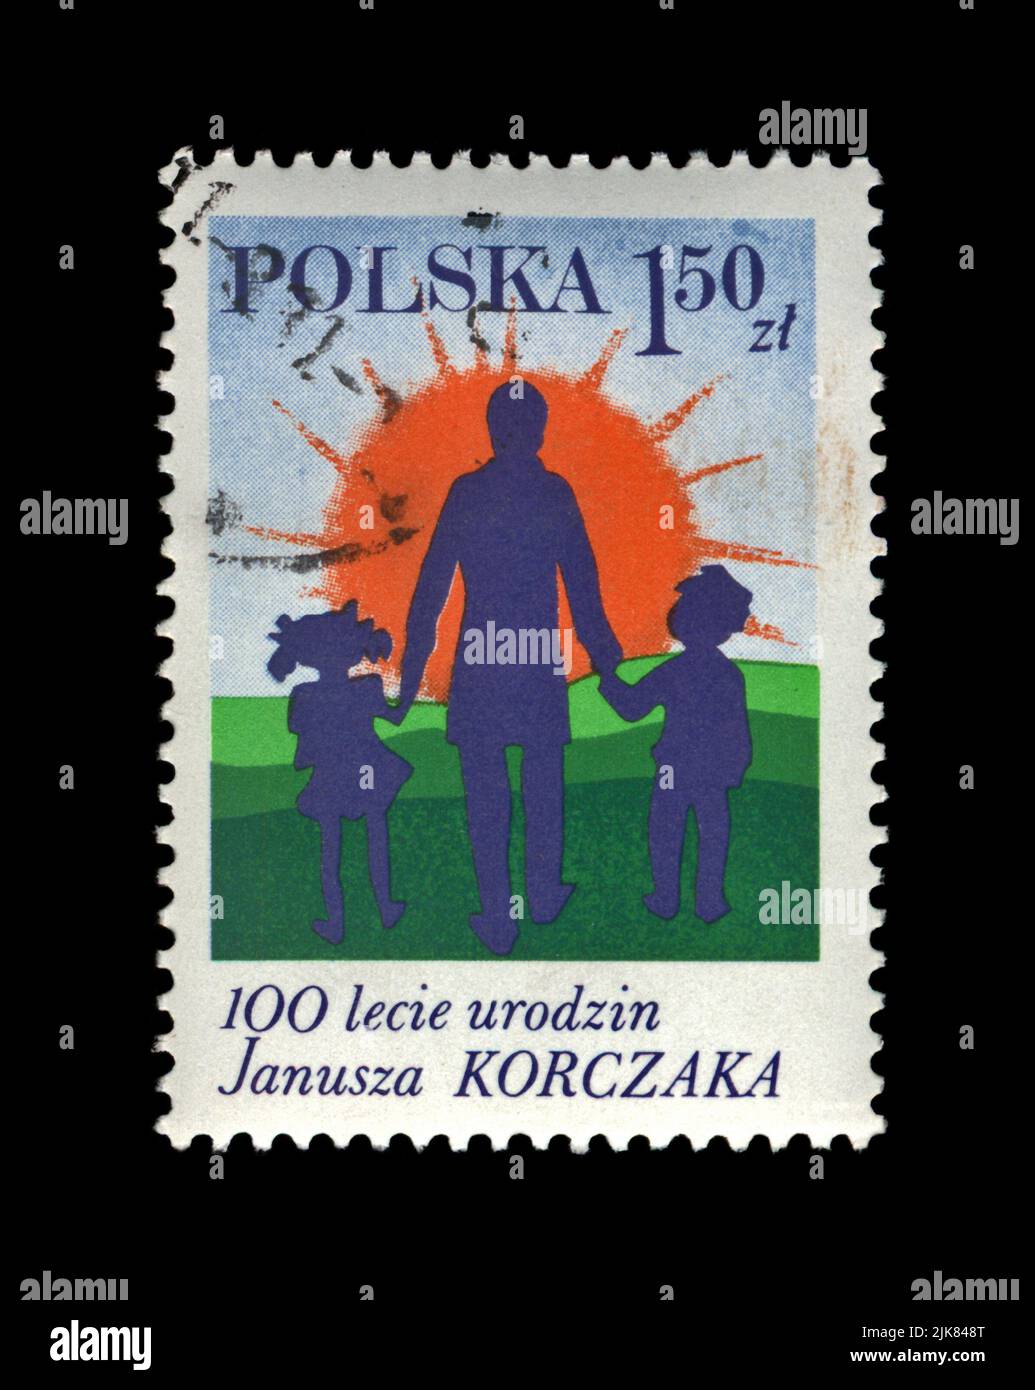 Janusz Korczak und Kinder, hundertjähriges Jubiläum, um 1978. J.Korczak (22,1878. Juli - 6,1942. August, Treblinka) - berühmter Arzt, Erzieher, Schriftsteller. Stockfoto